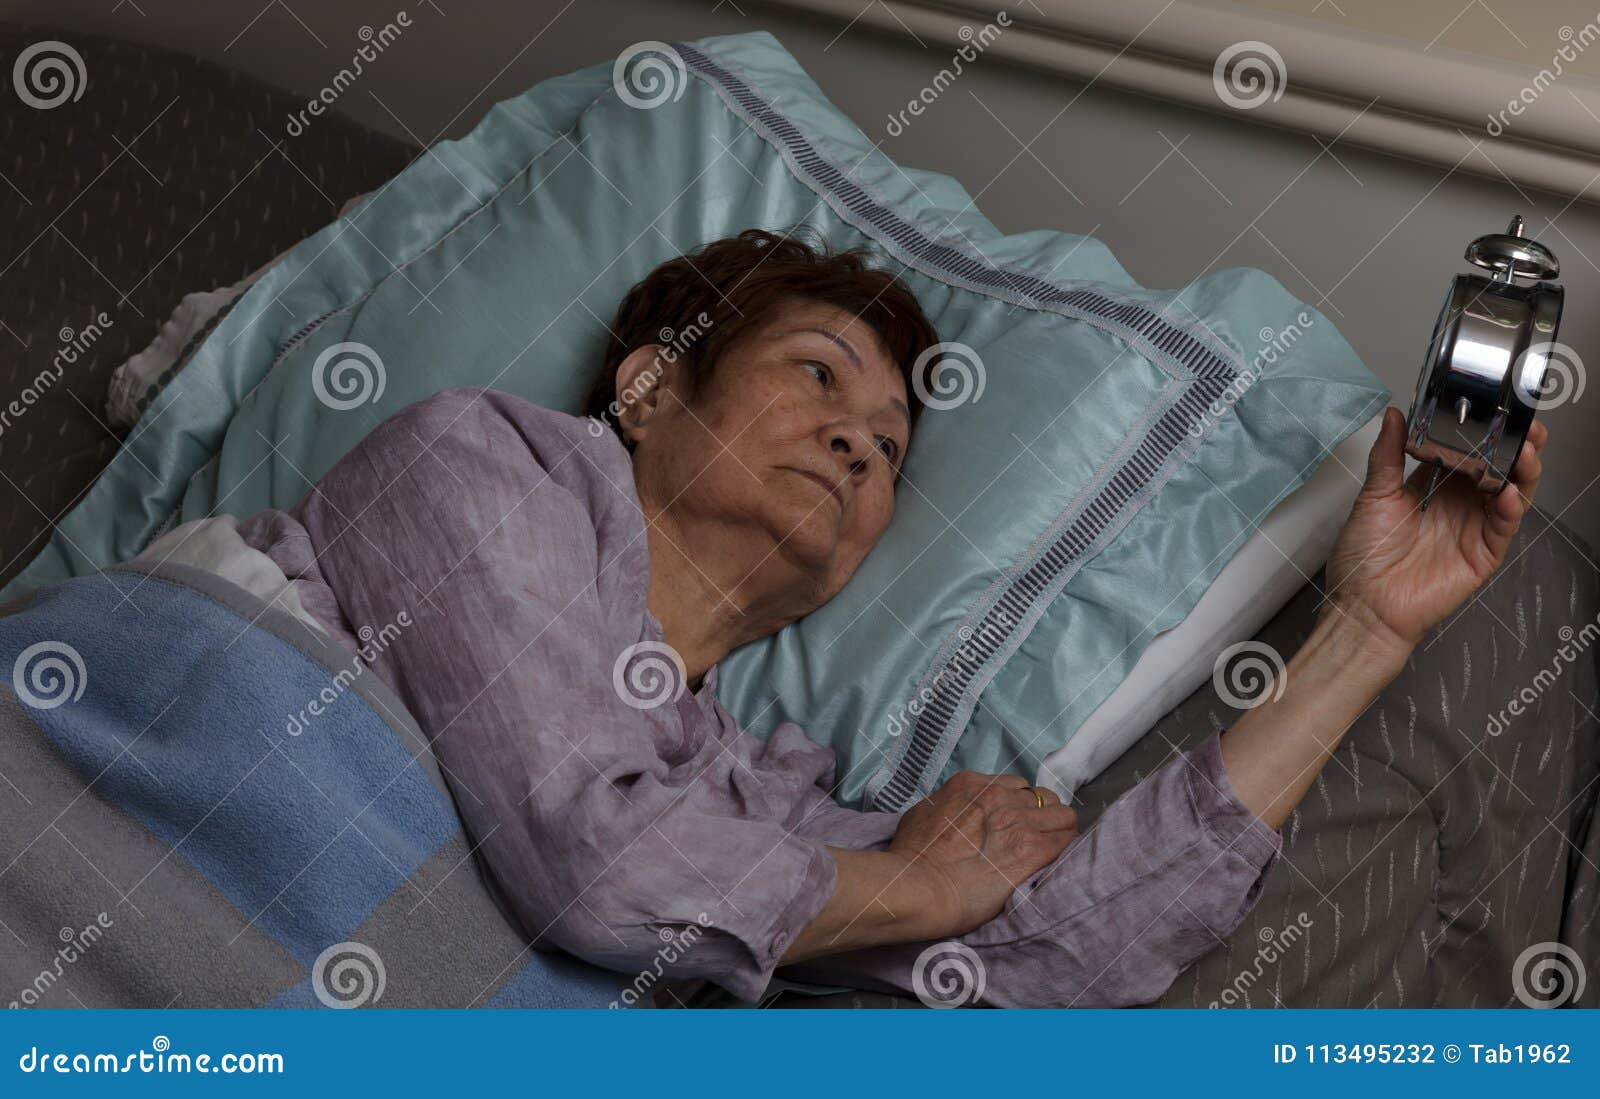 restless senior woman glaring at alarm clock during nighttime while in bed